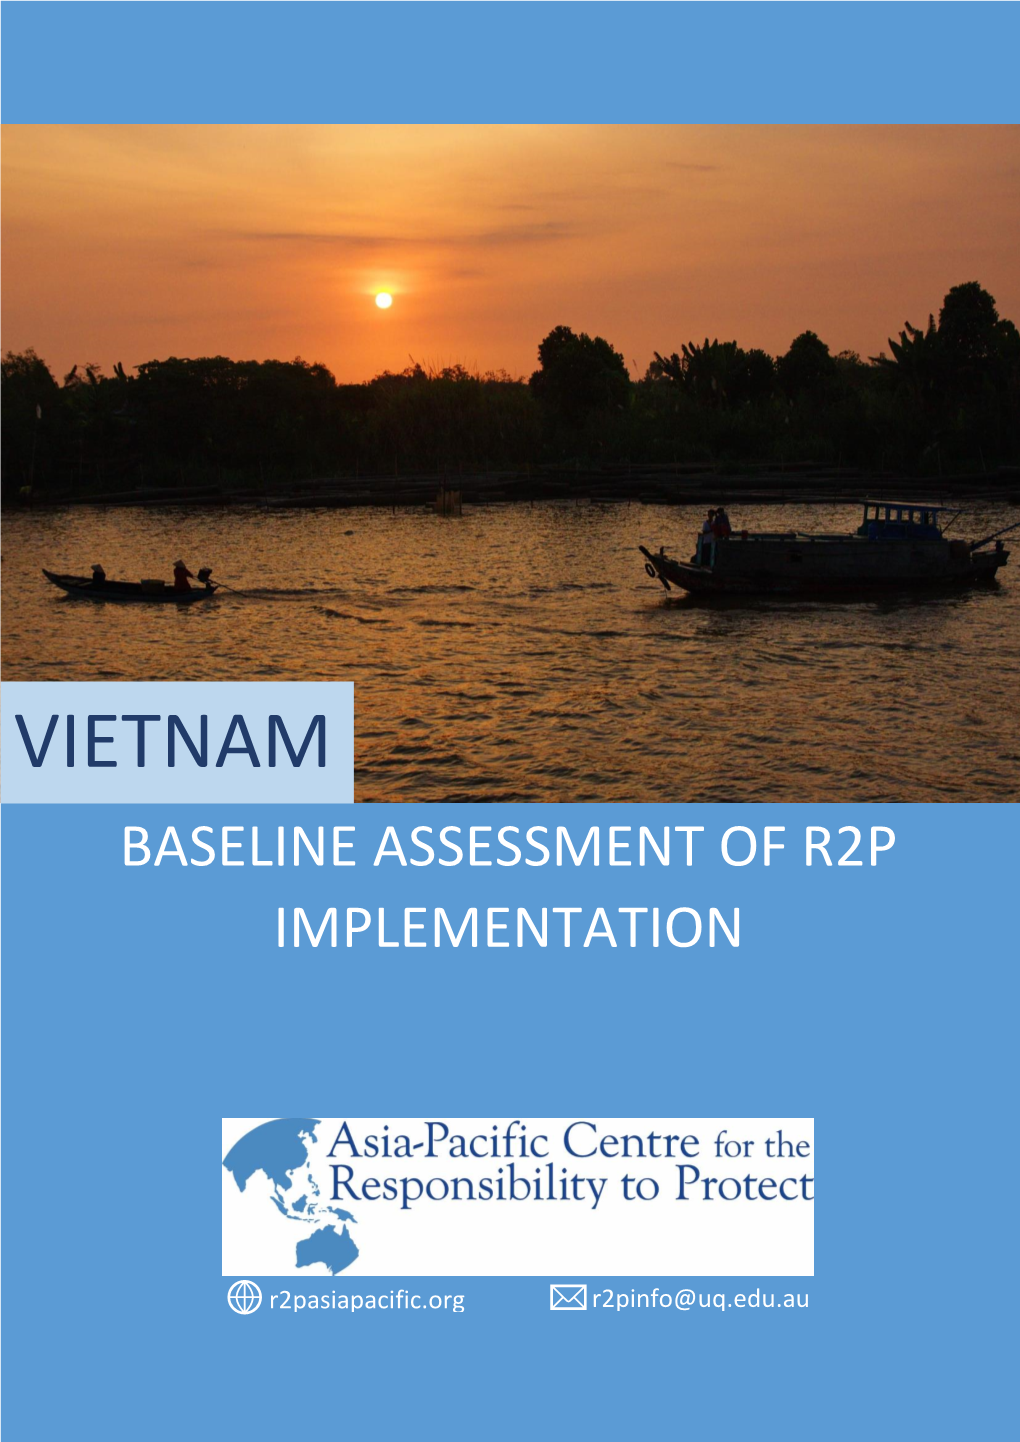 Vietnam Baseline Assessment of R2p Implementation